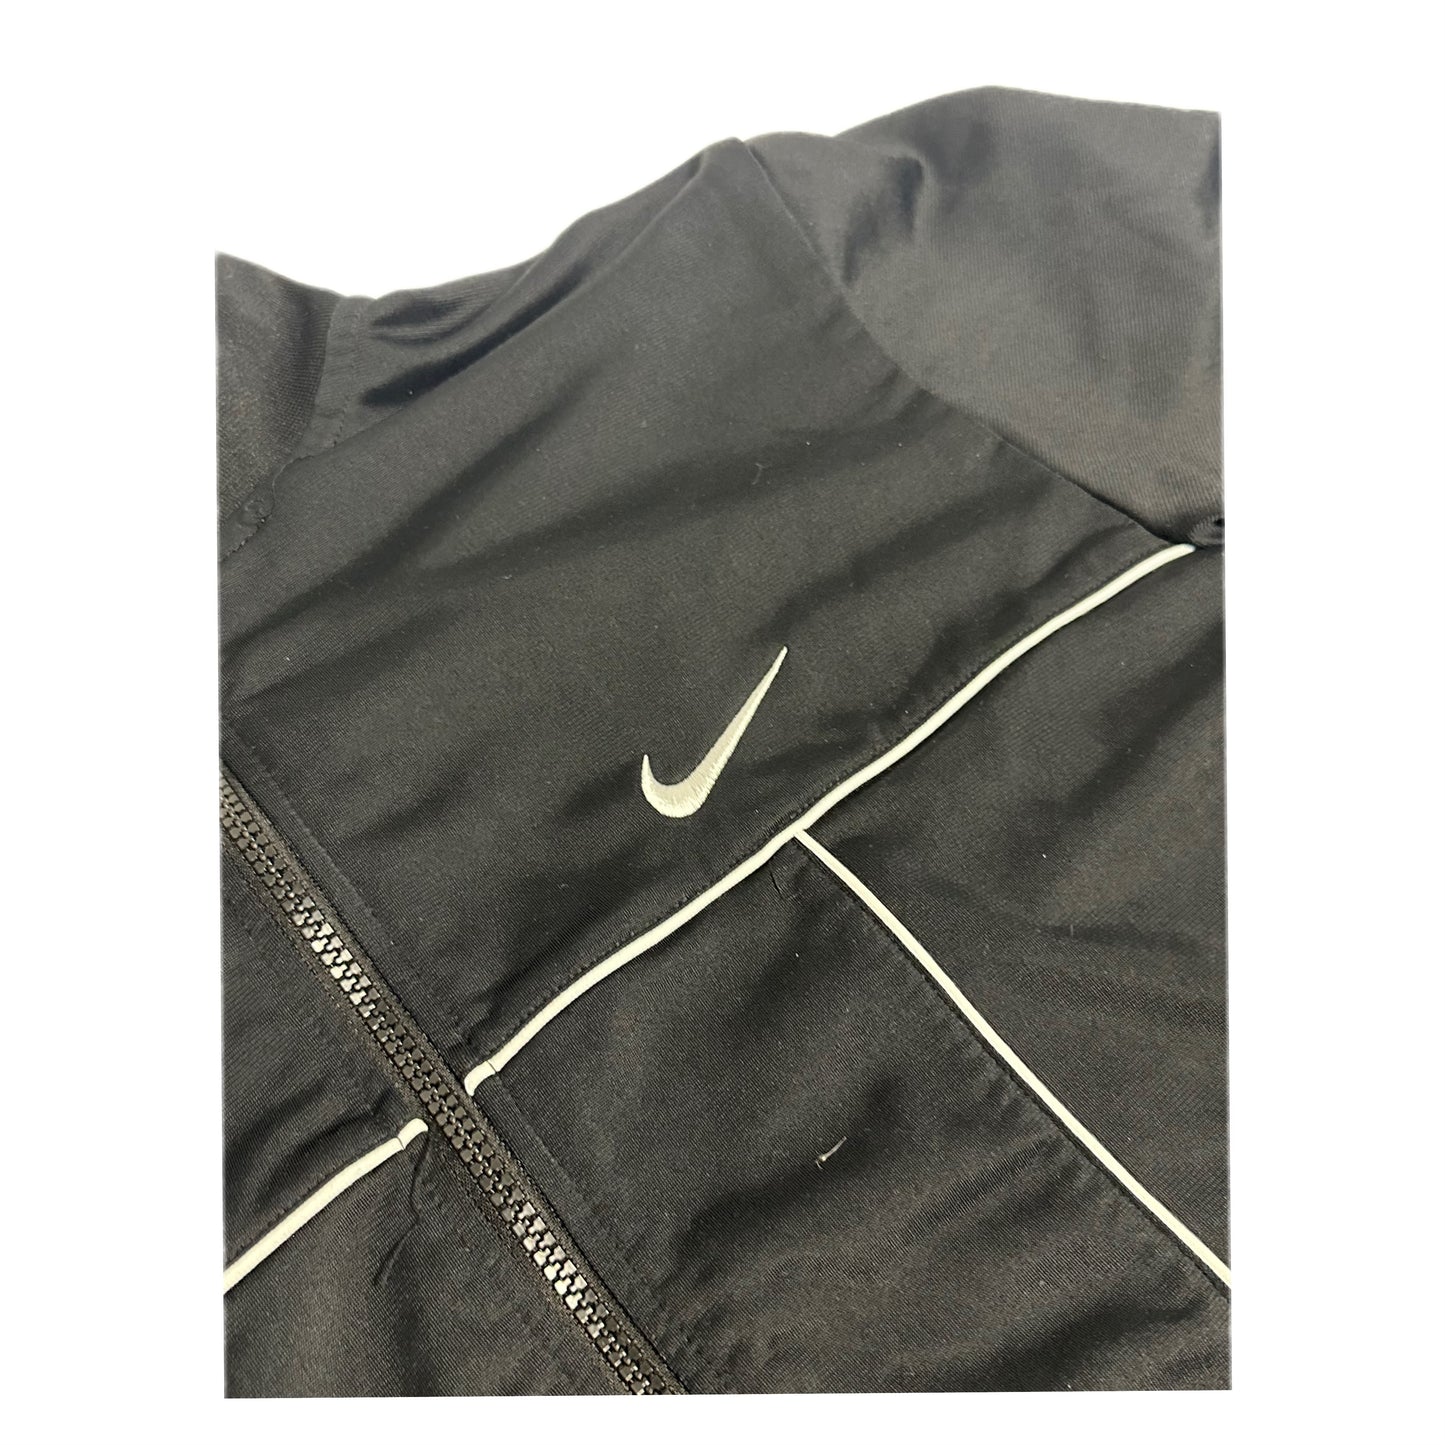 Nike trackjacket black